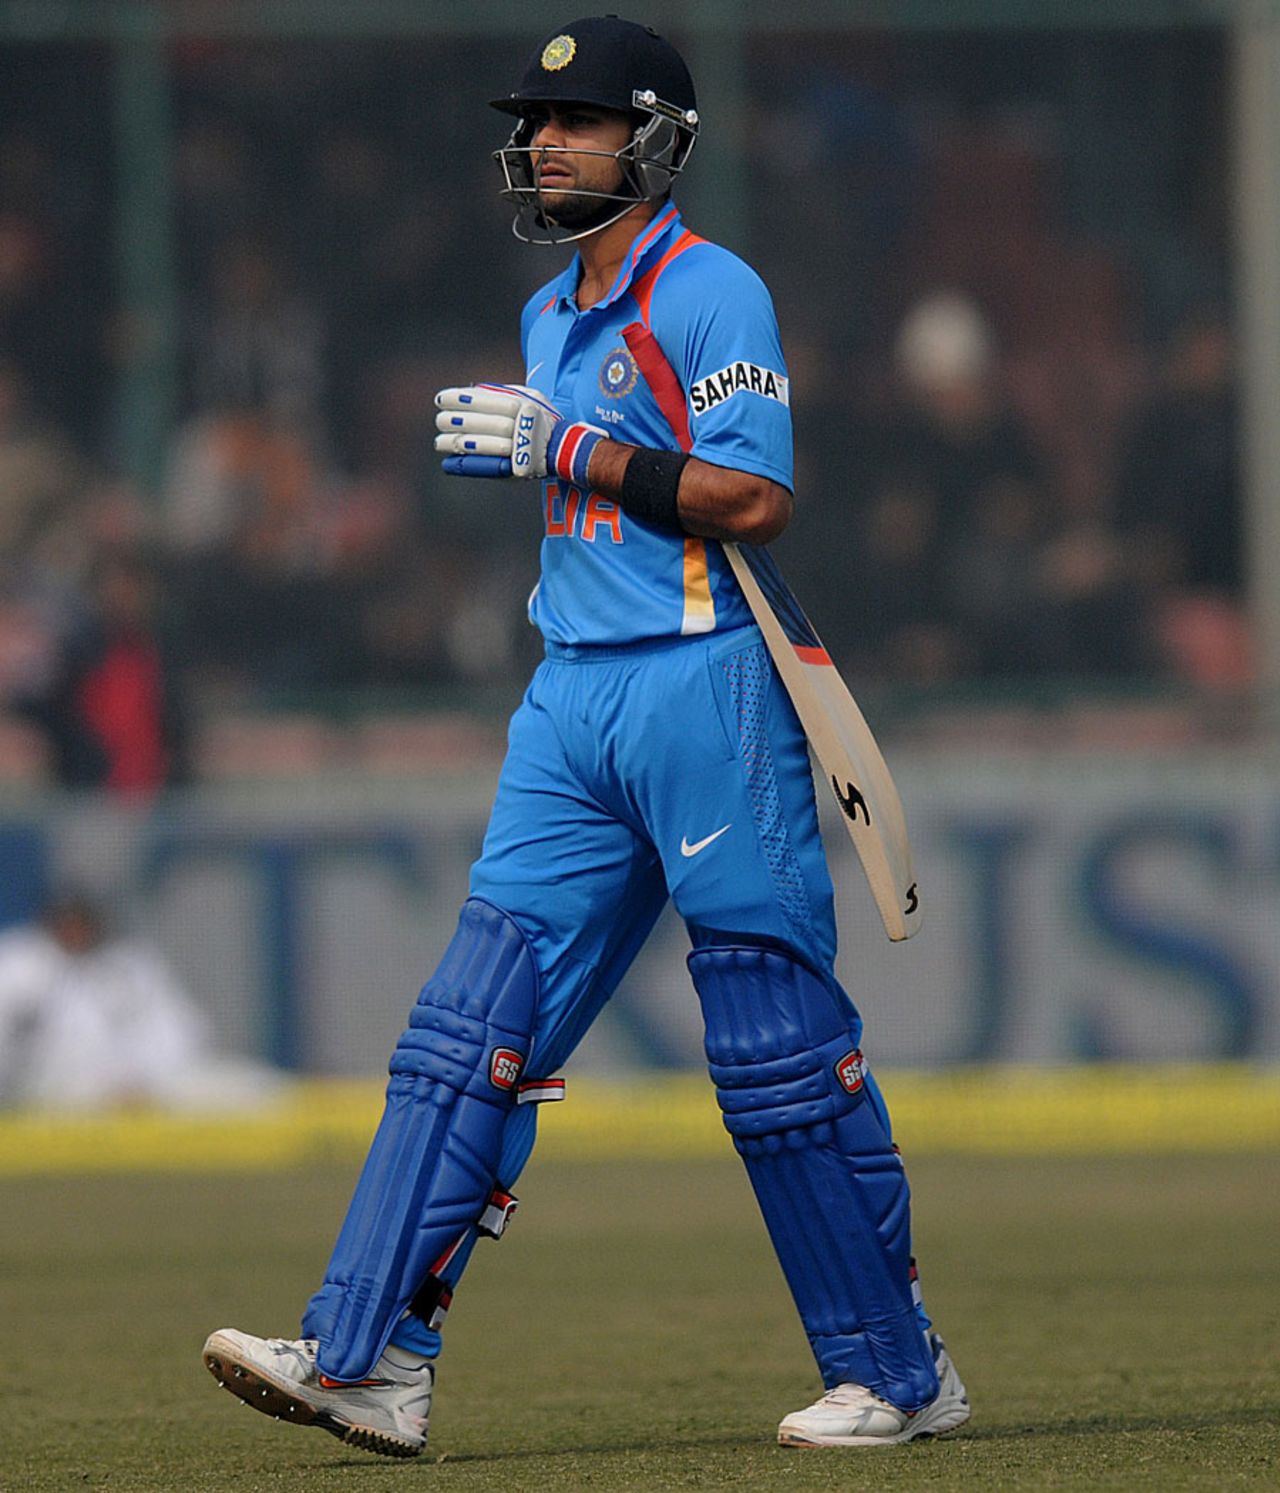 Virat Kohli was dismissed for 7, India v Pakistan, 3rd ODI, Delhi, January 6, 2013